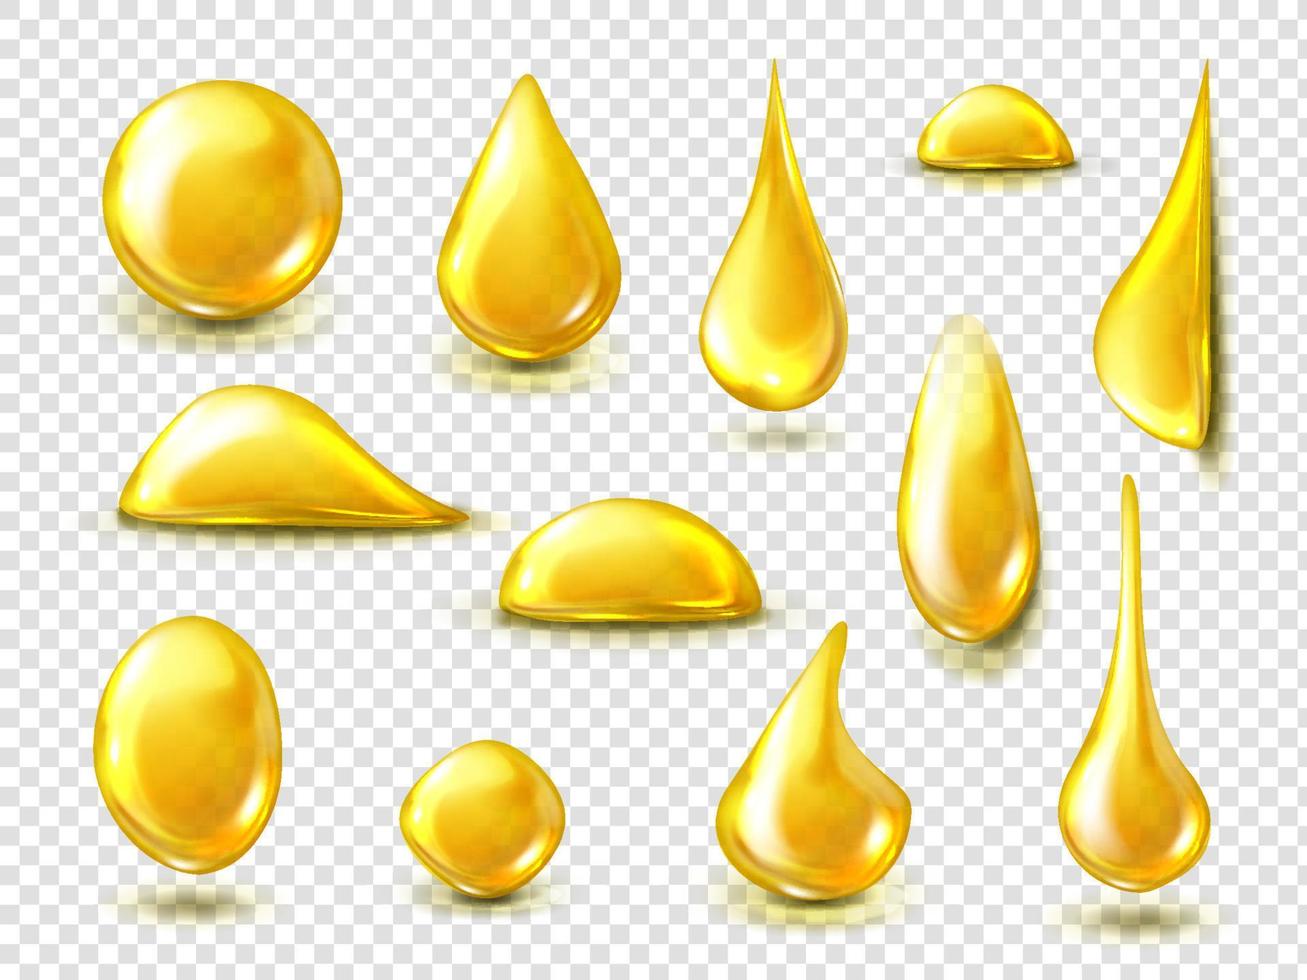 Realistic set of golden drops of oil or honey vector